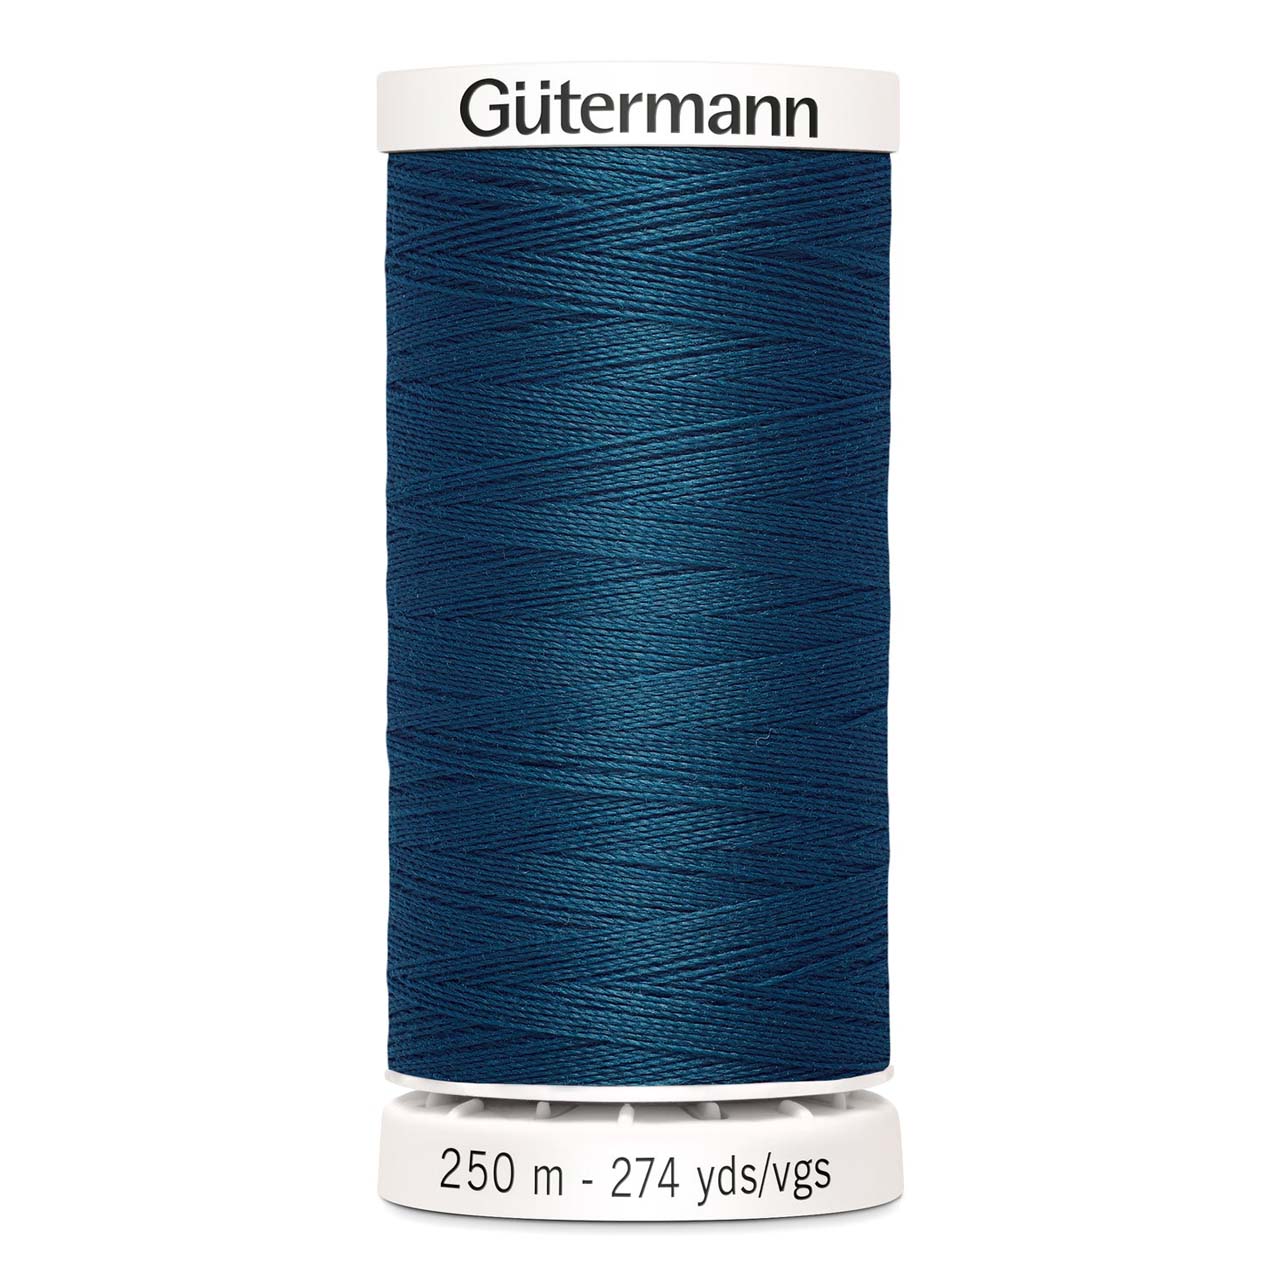 Gutermann thread 870 sewing thread 250 metres